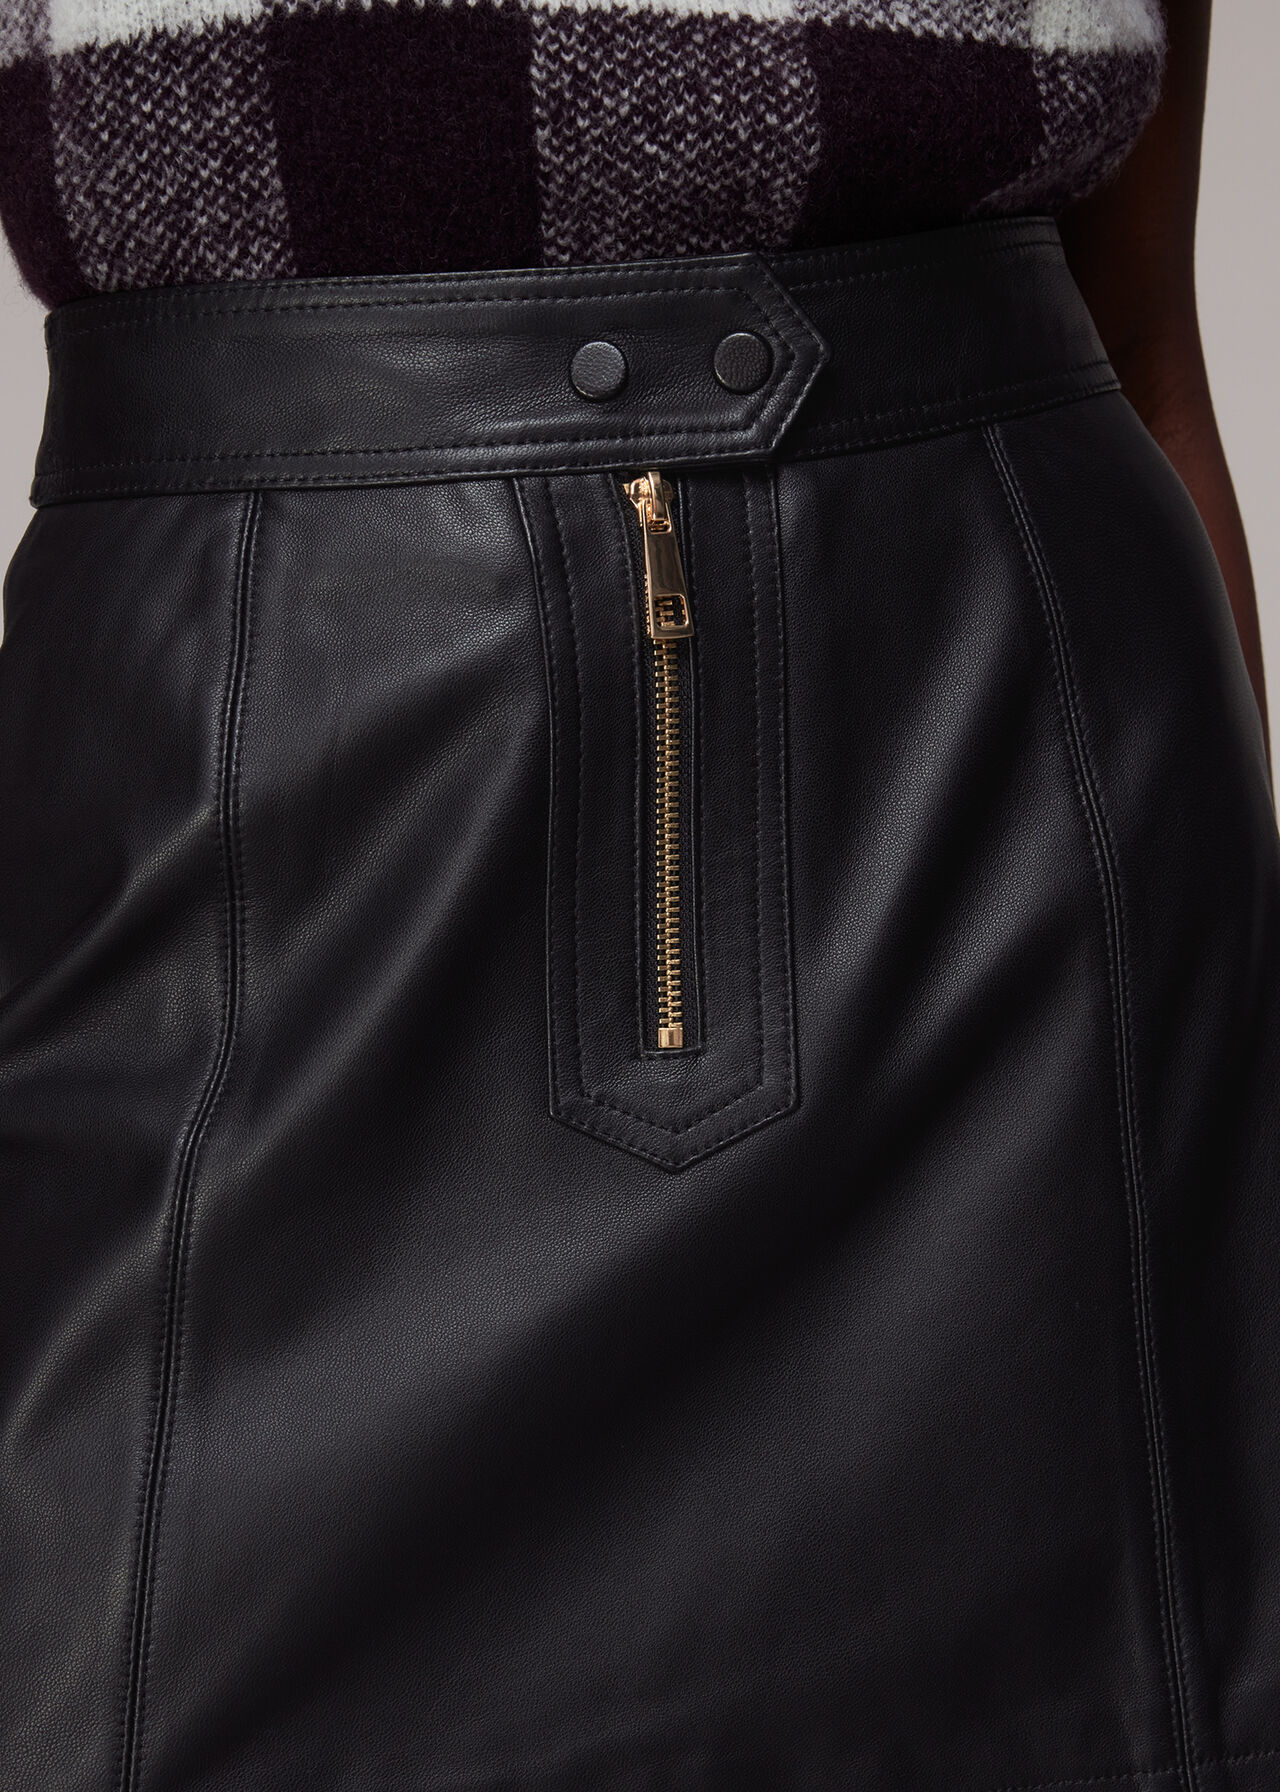 Black Zip Front Detail Leather Skirt | WHISTLES